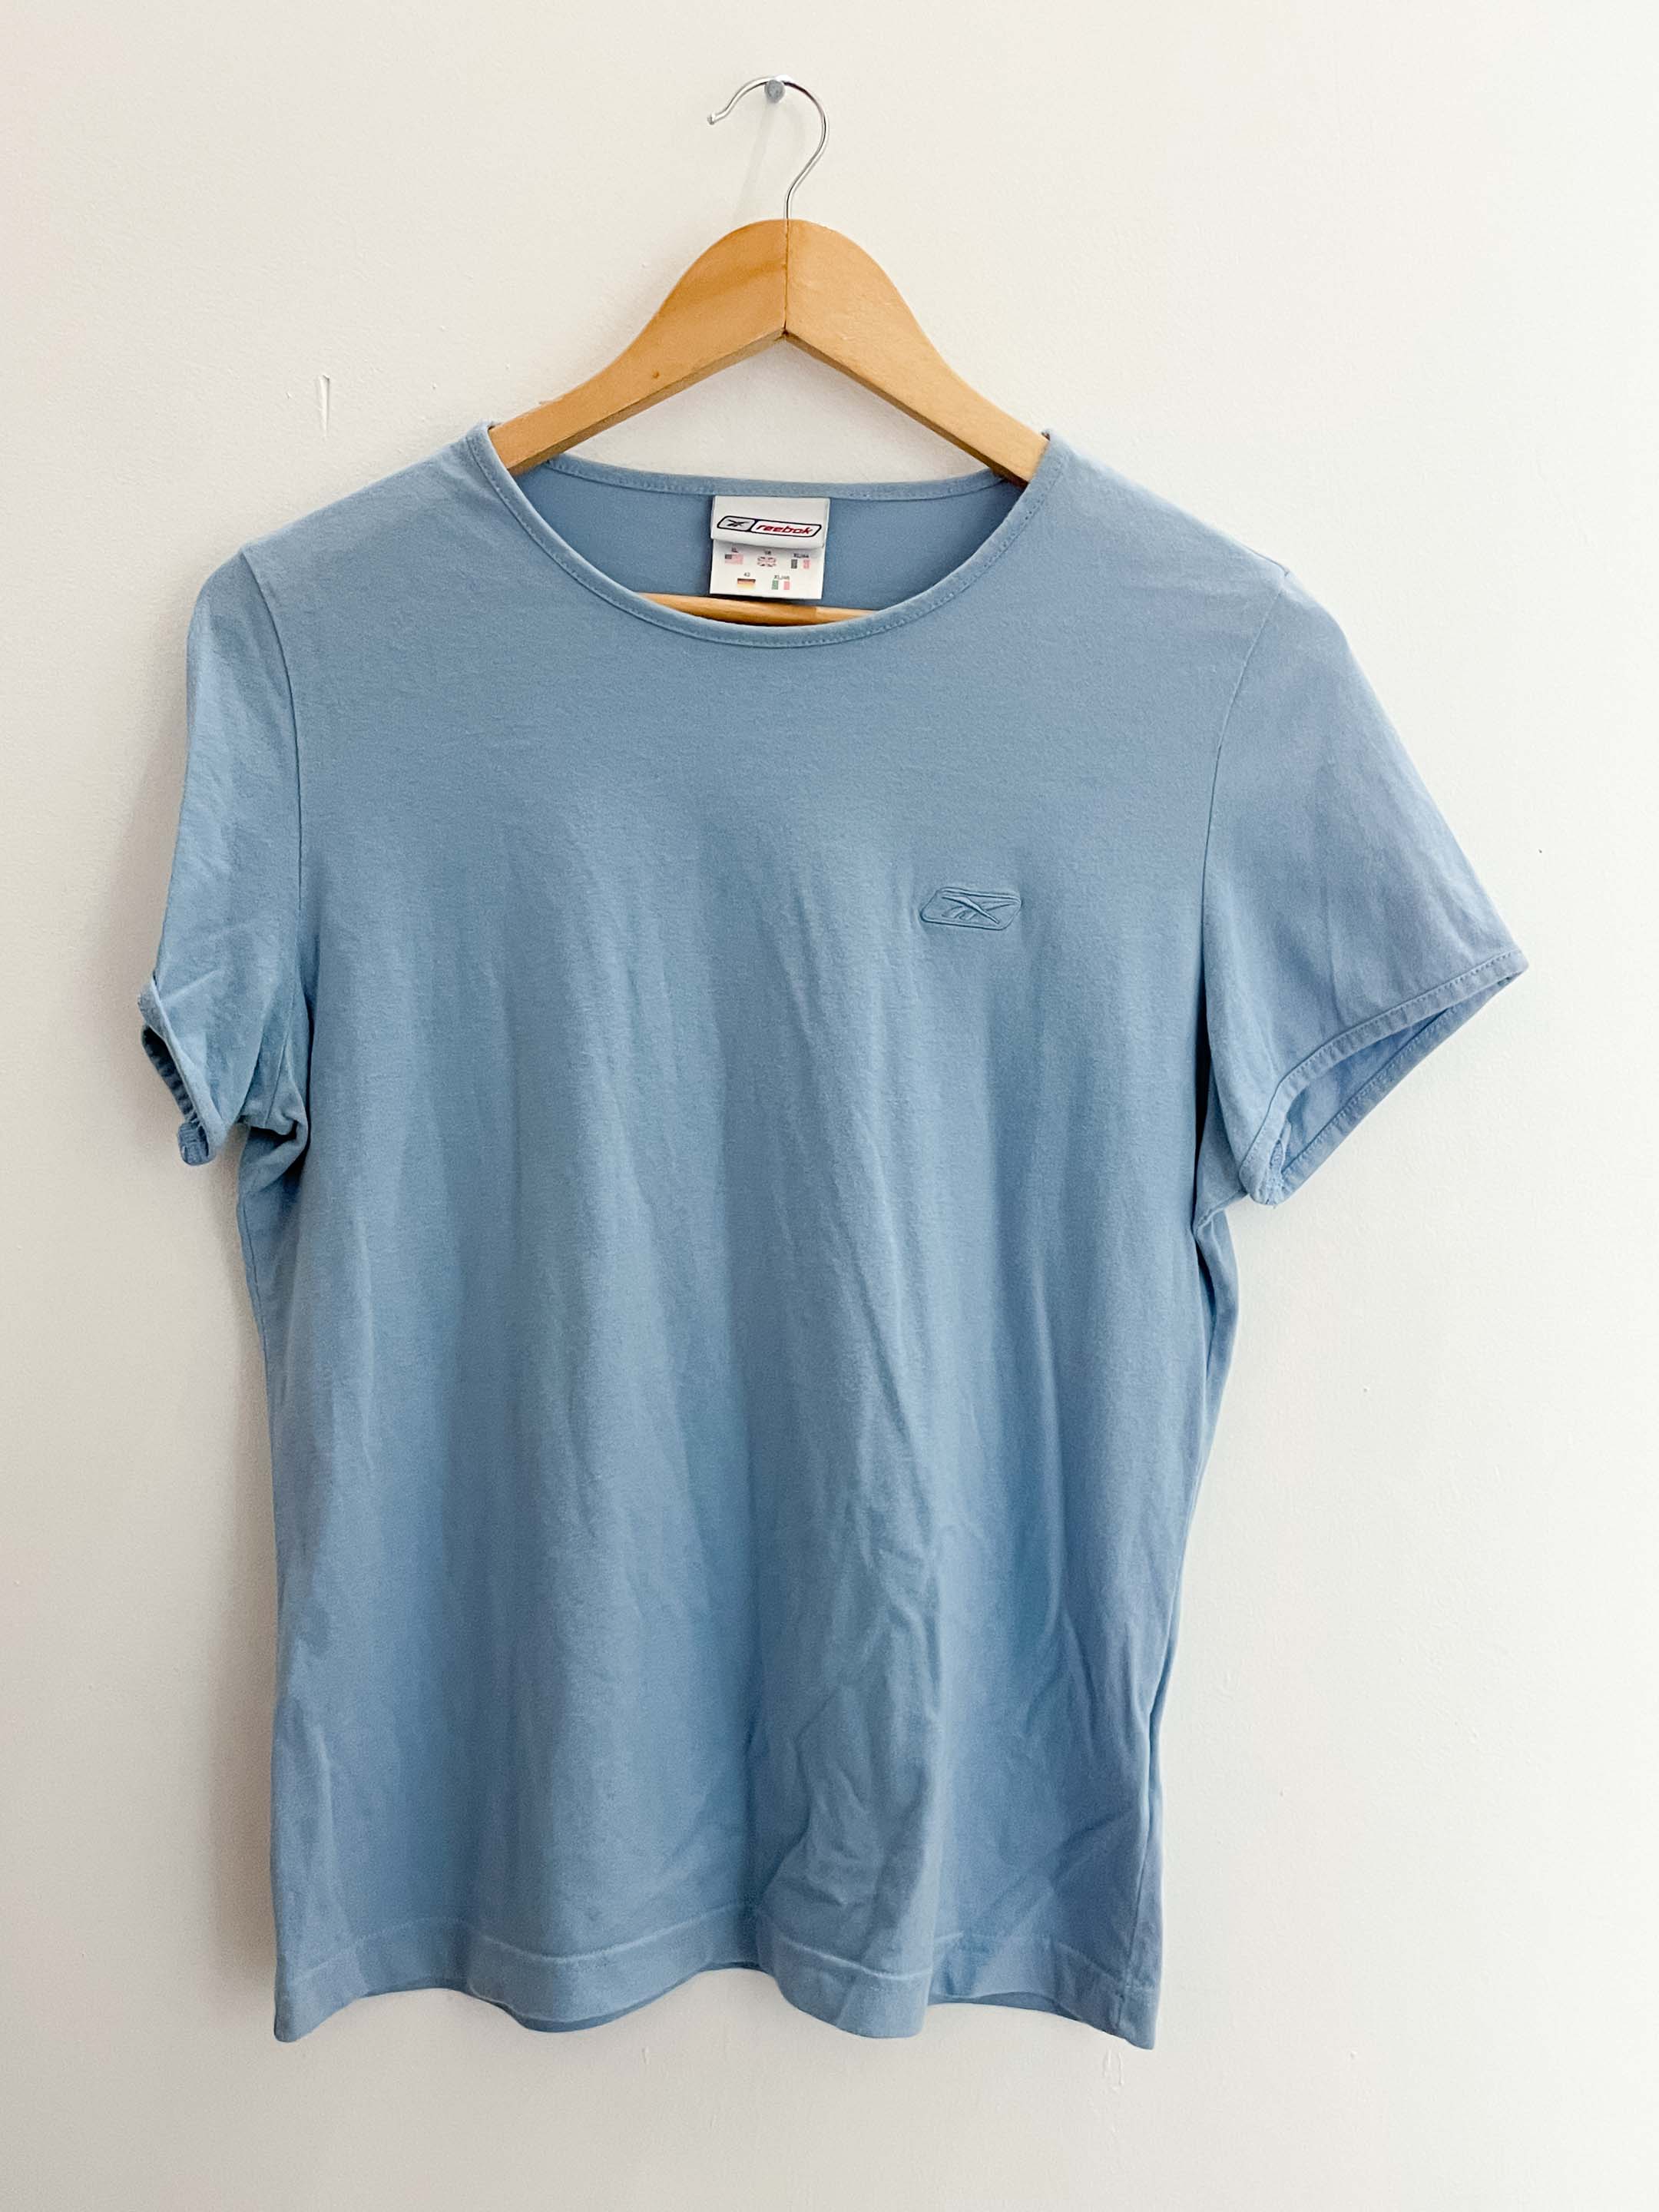 Vintage blue reebok tshirt size XL